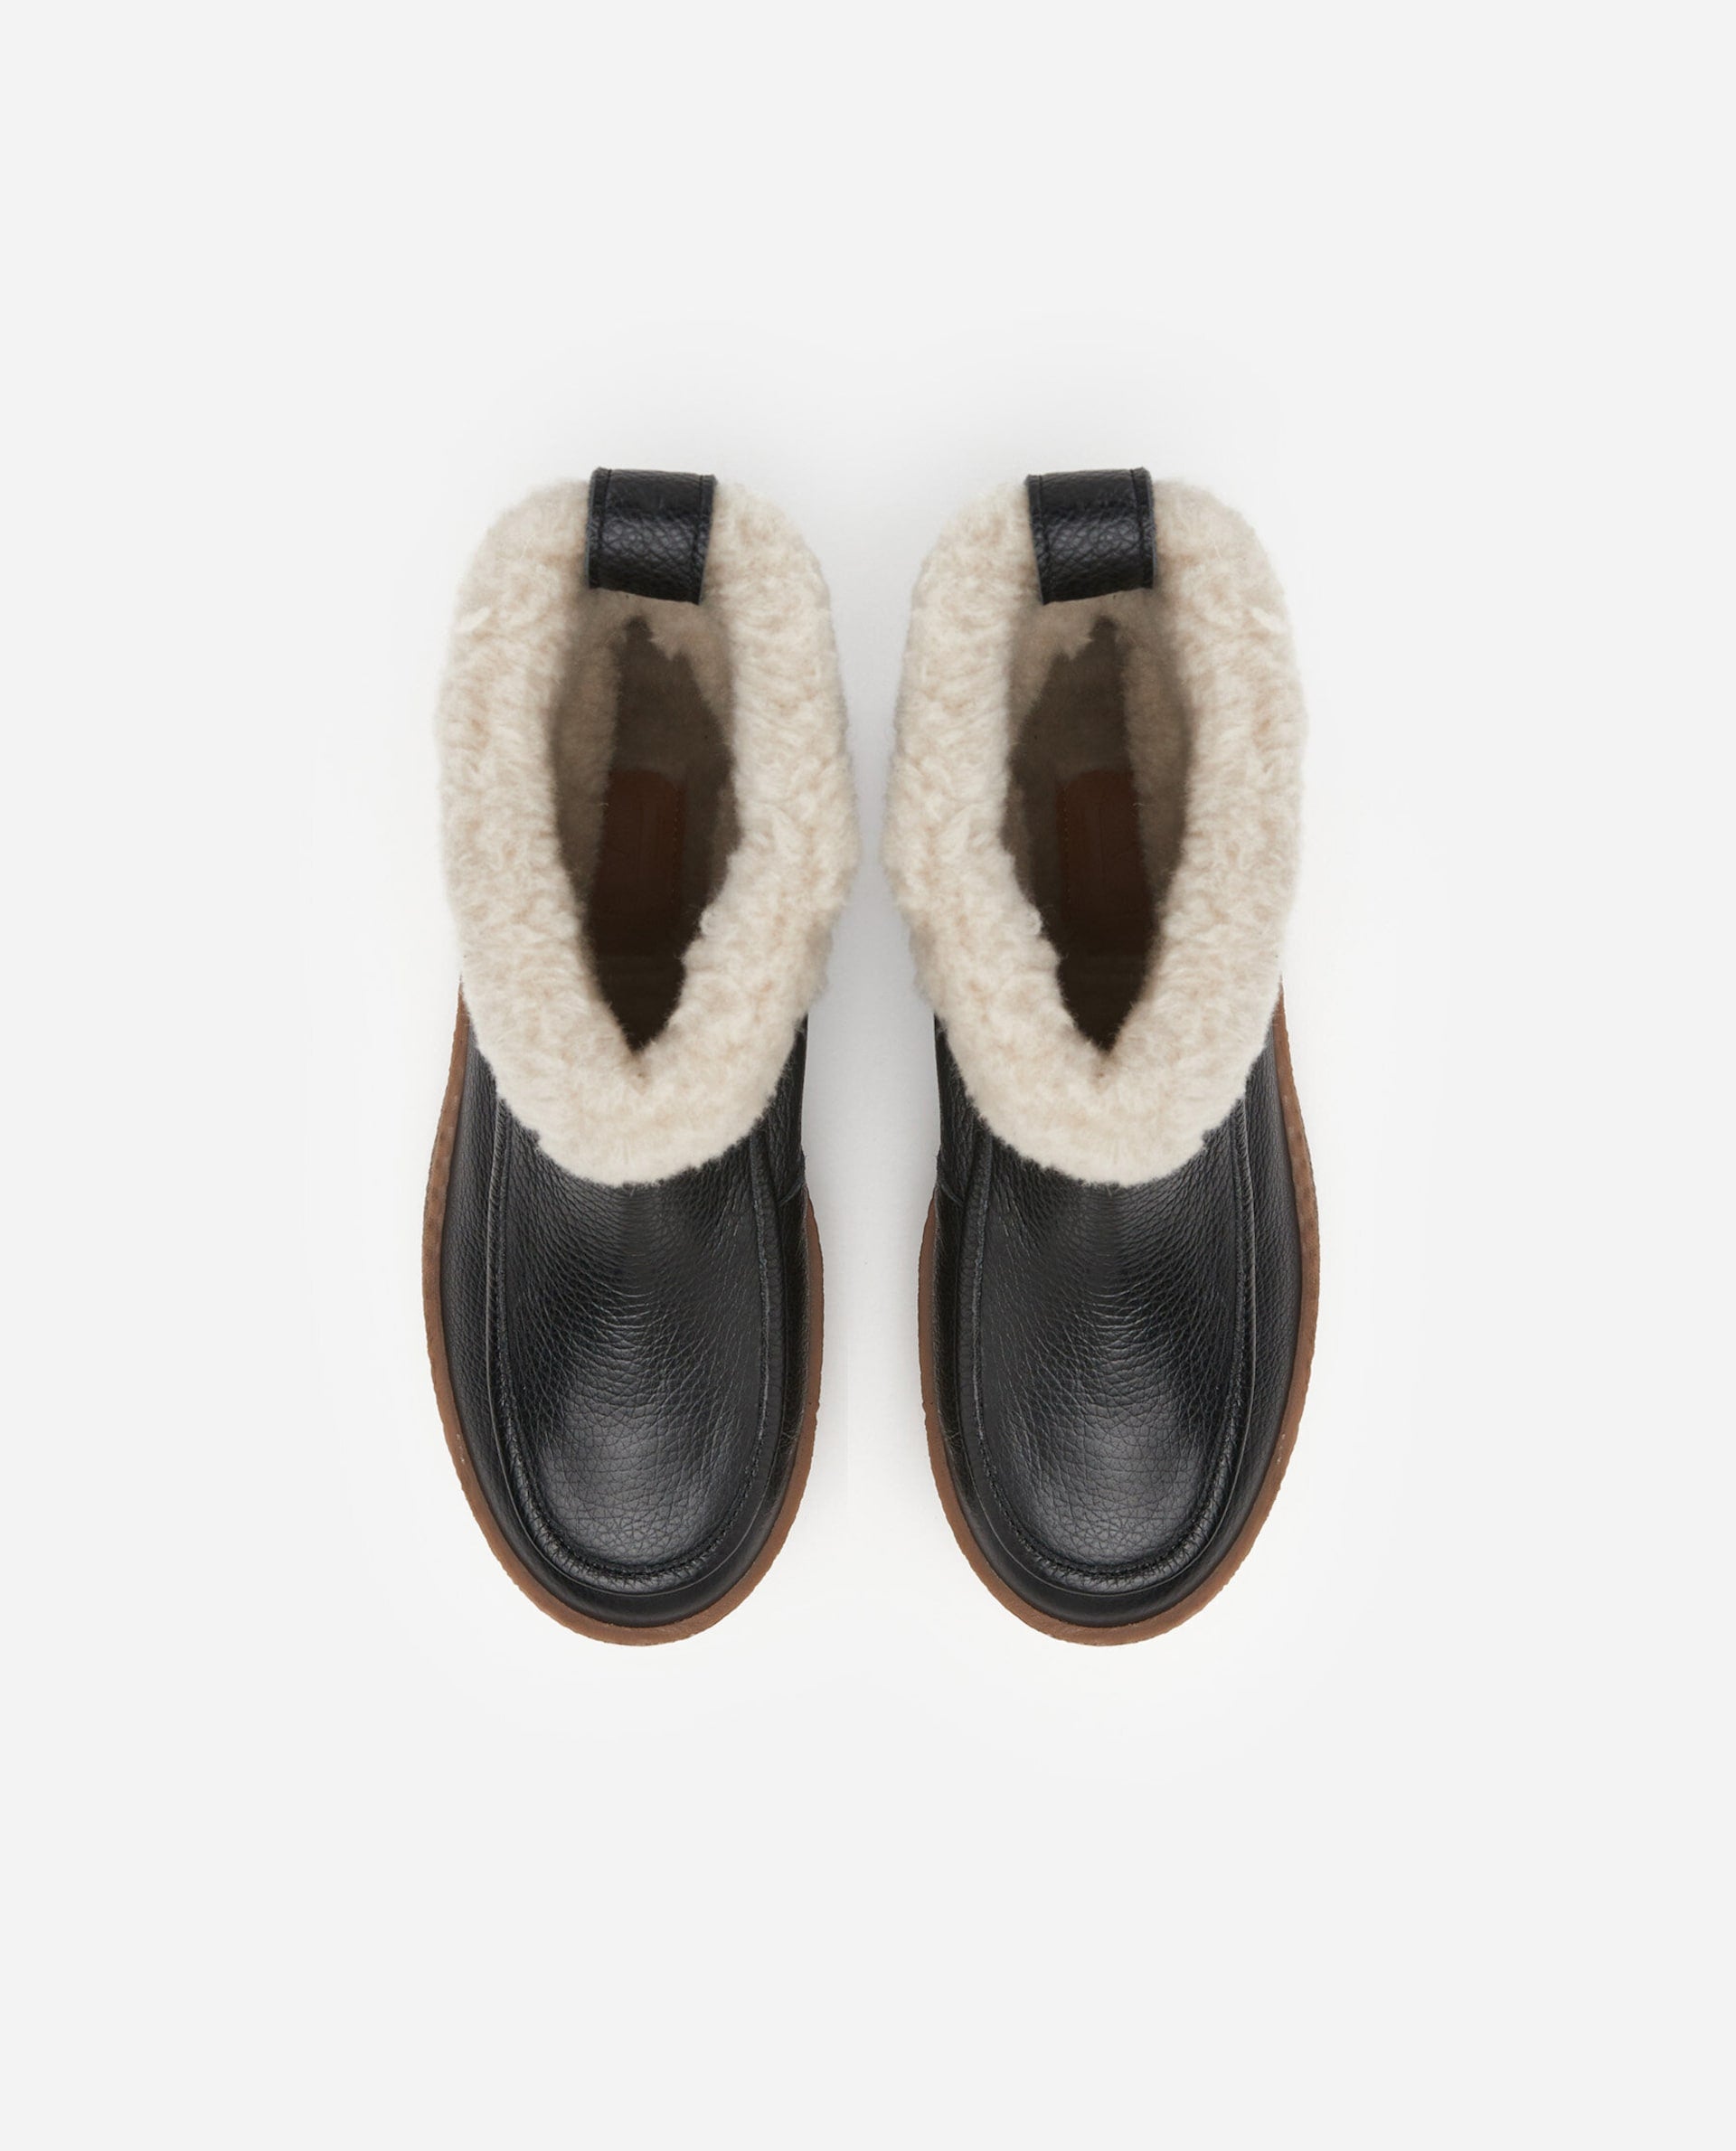 Simone Black Leather Winter Boots 22020923601-001 -4